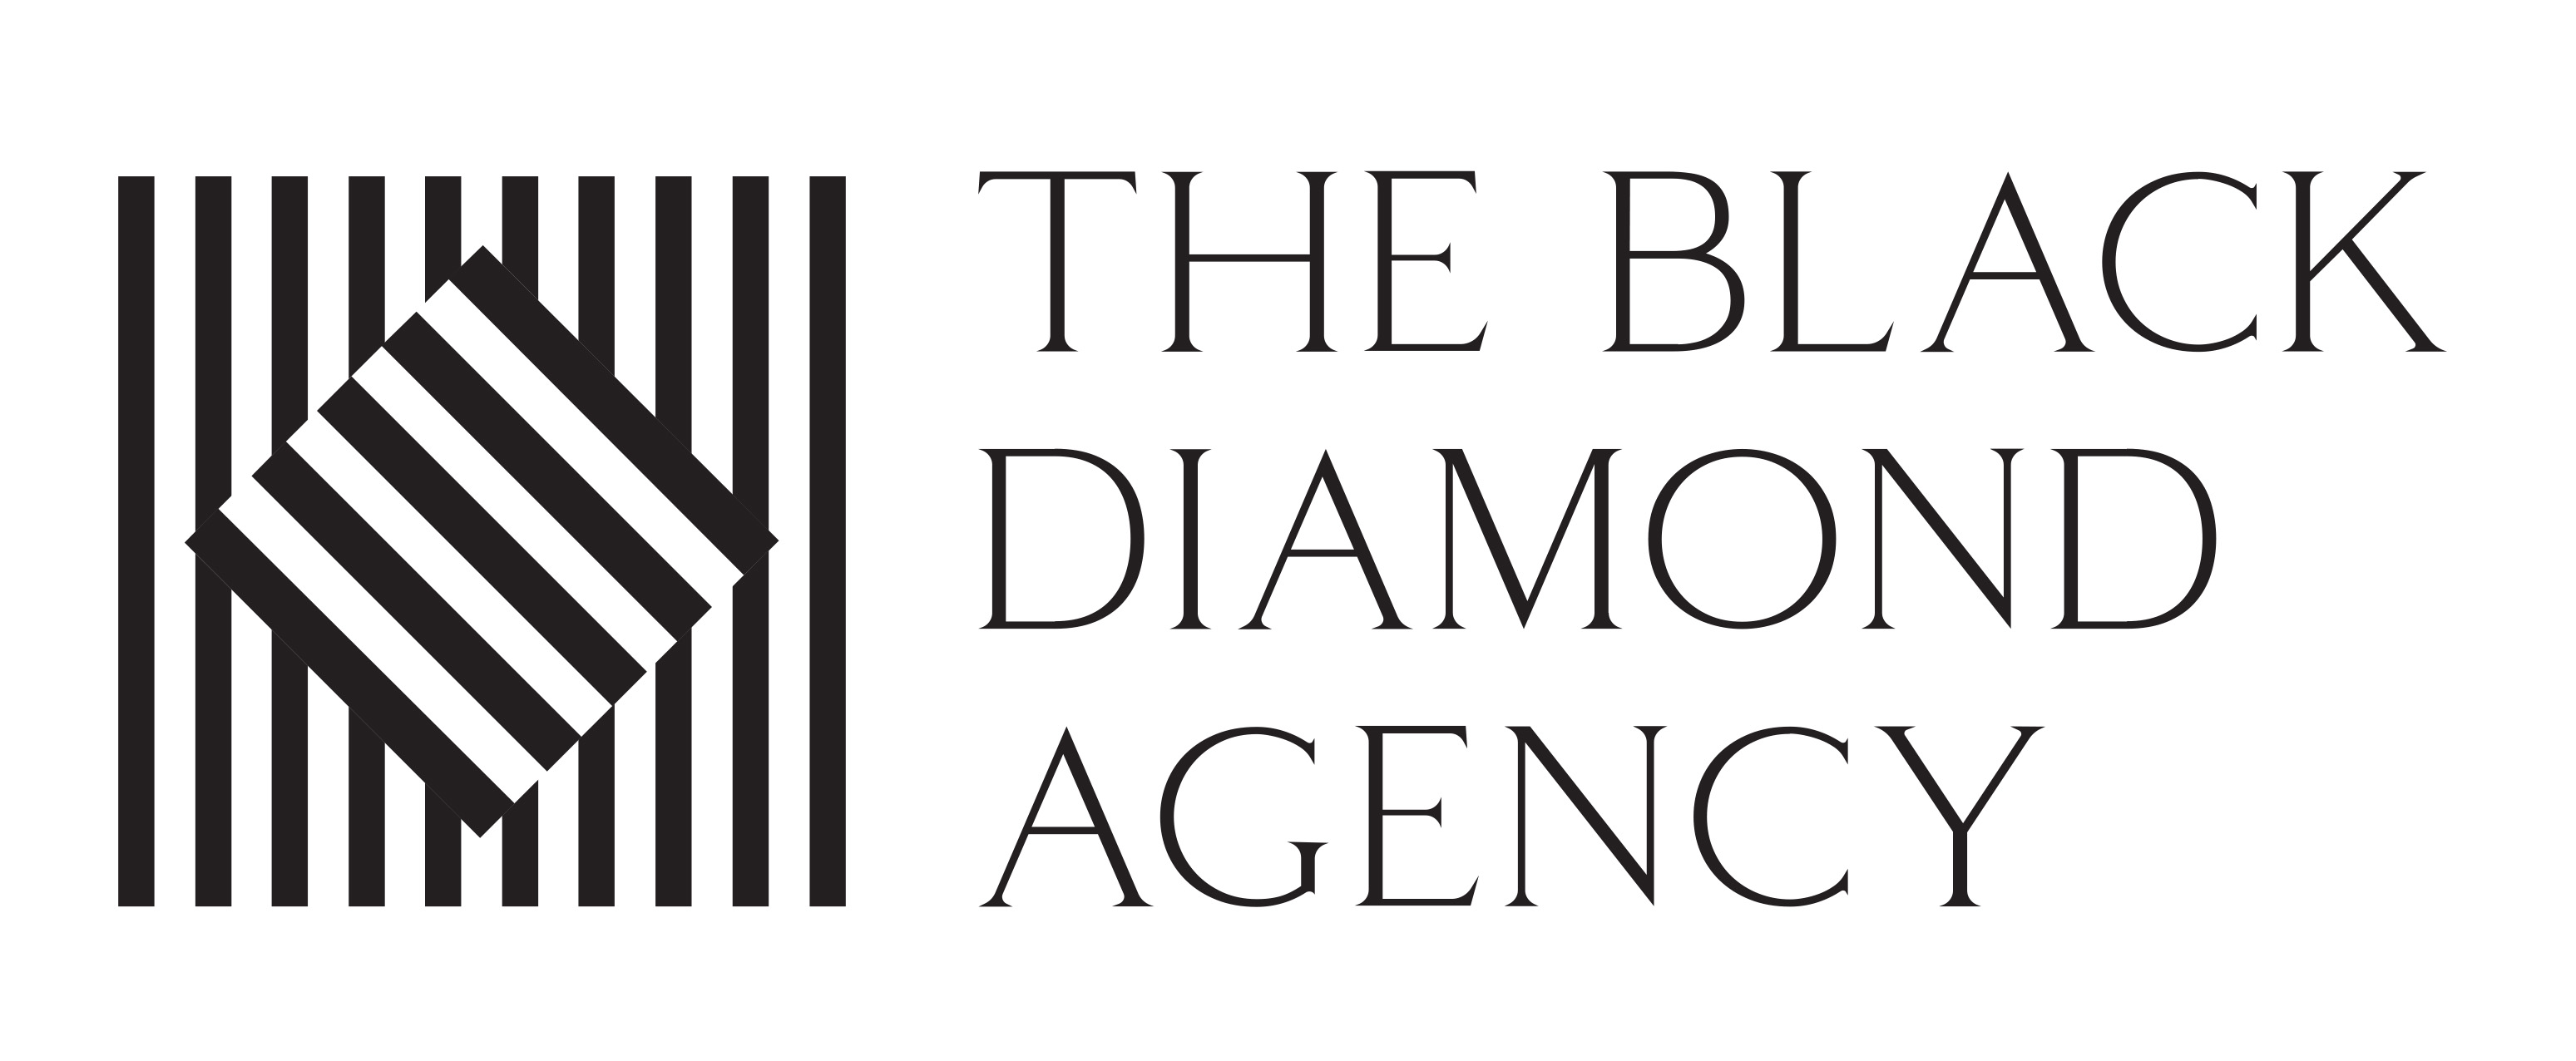 The Black Diamond Agency, LLC